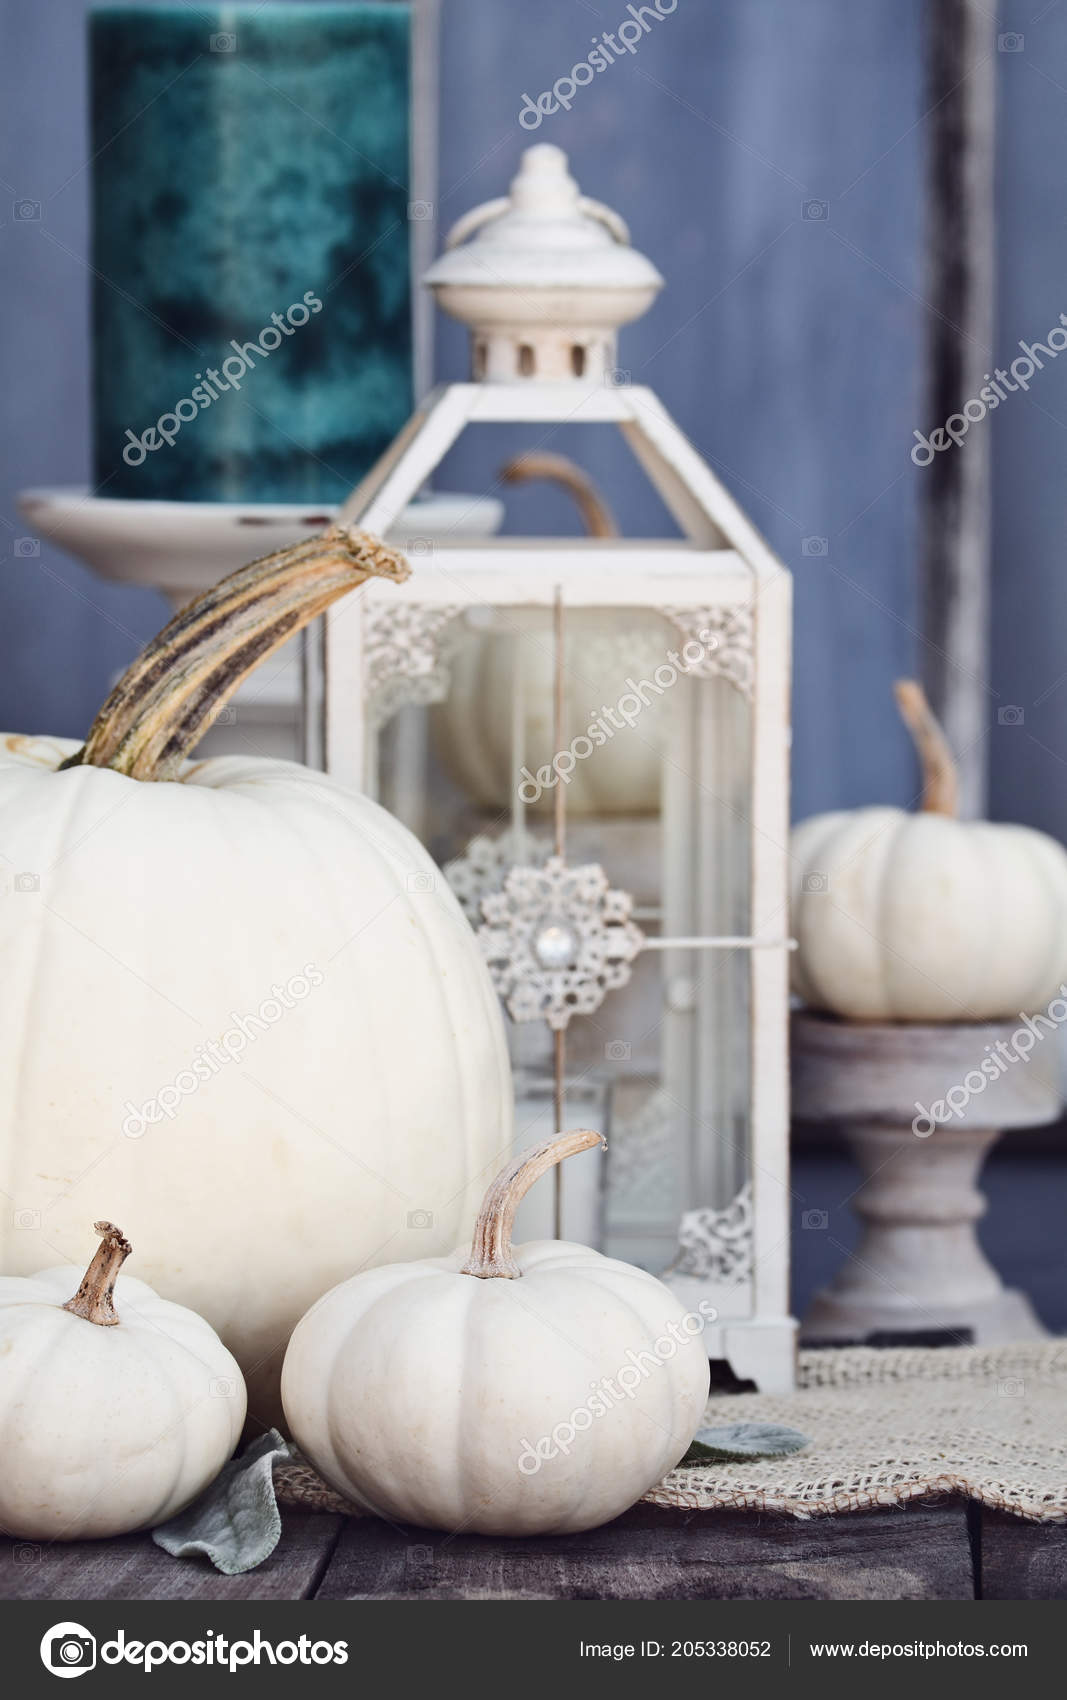 https://st4.depositphotos.com/1008041/20533/i/1600/depositphotos_205338052-stock-photo-autumn-decorations-heirloom-mini-large.jpg